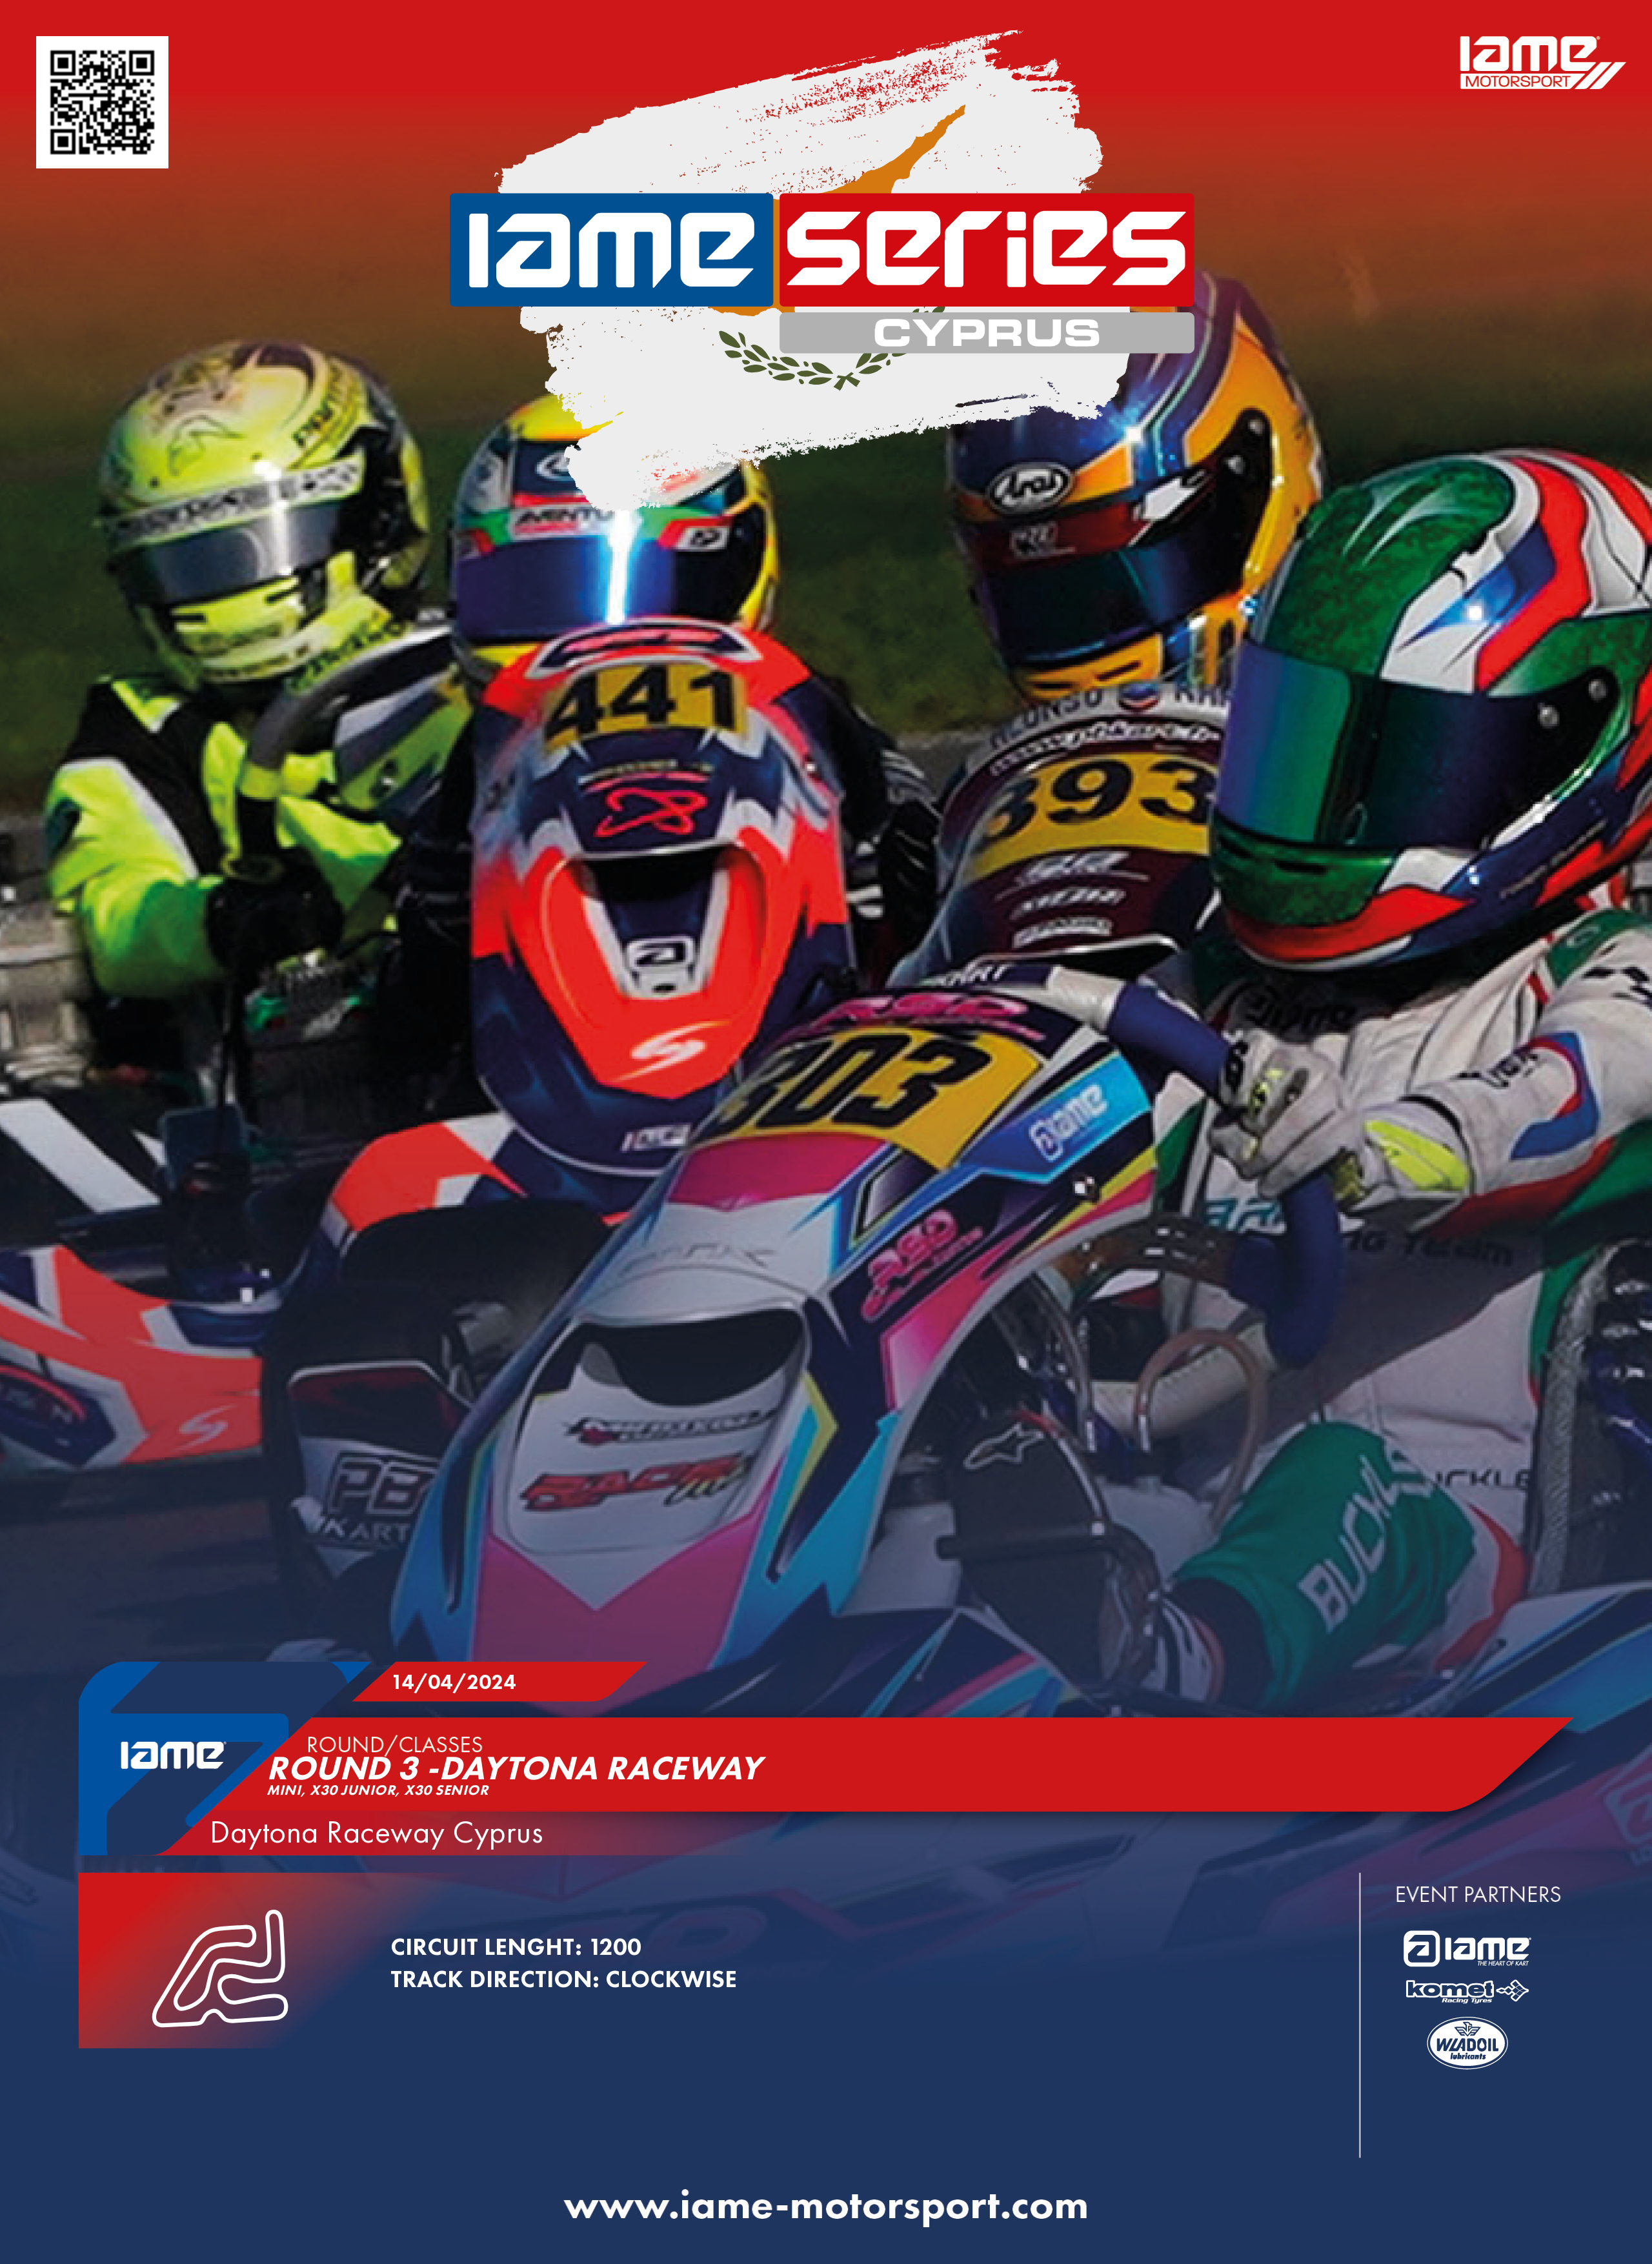 Round 3 - Daytona Raceway: Exciting Championship Karting at IAME Series Cyprus